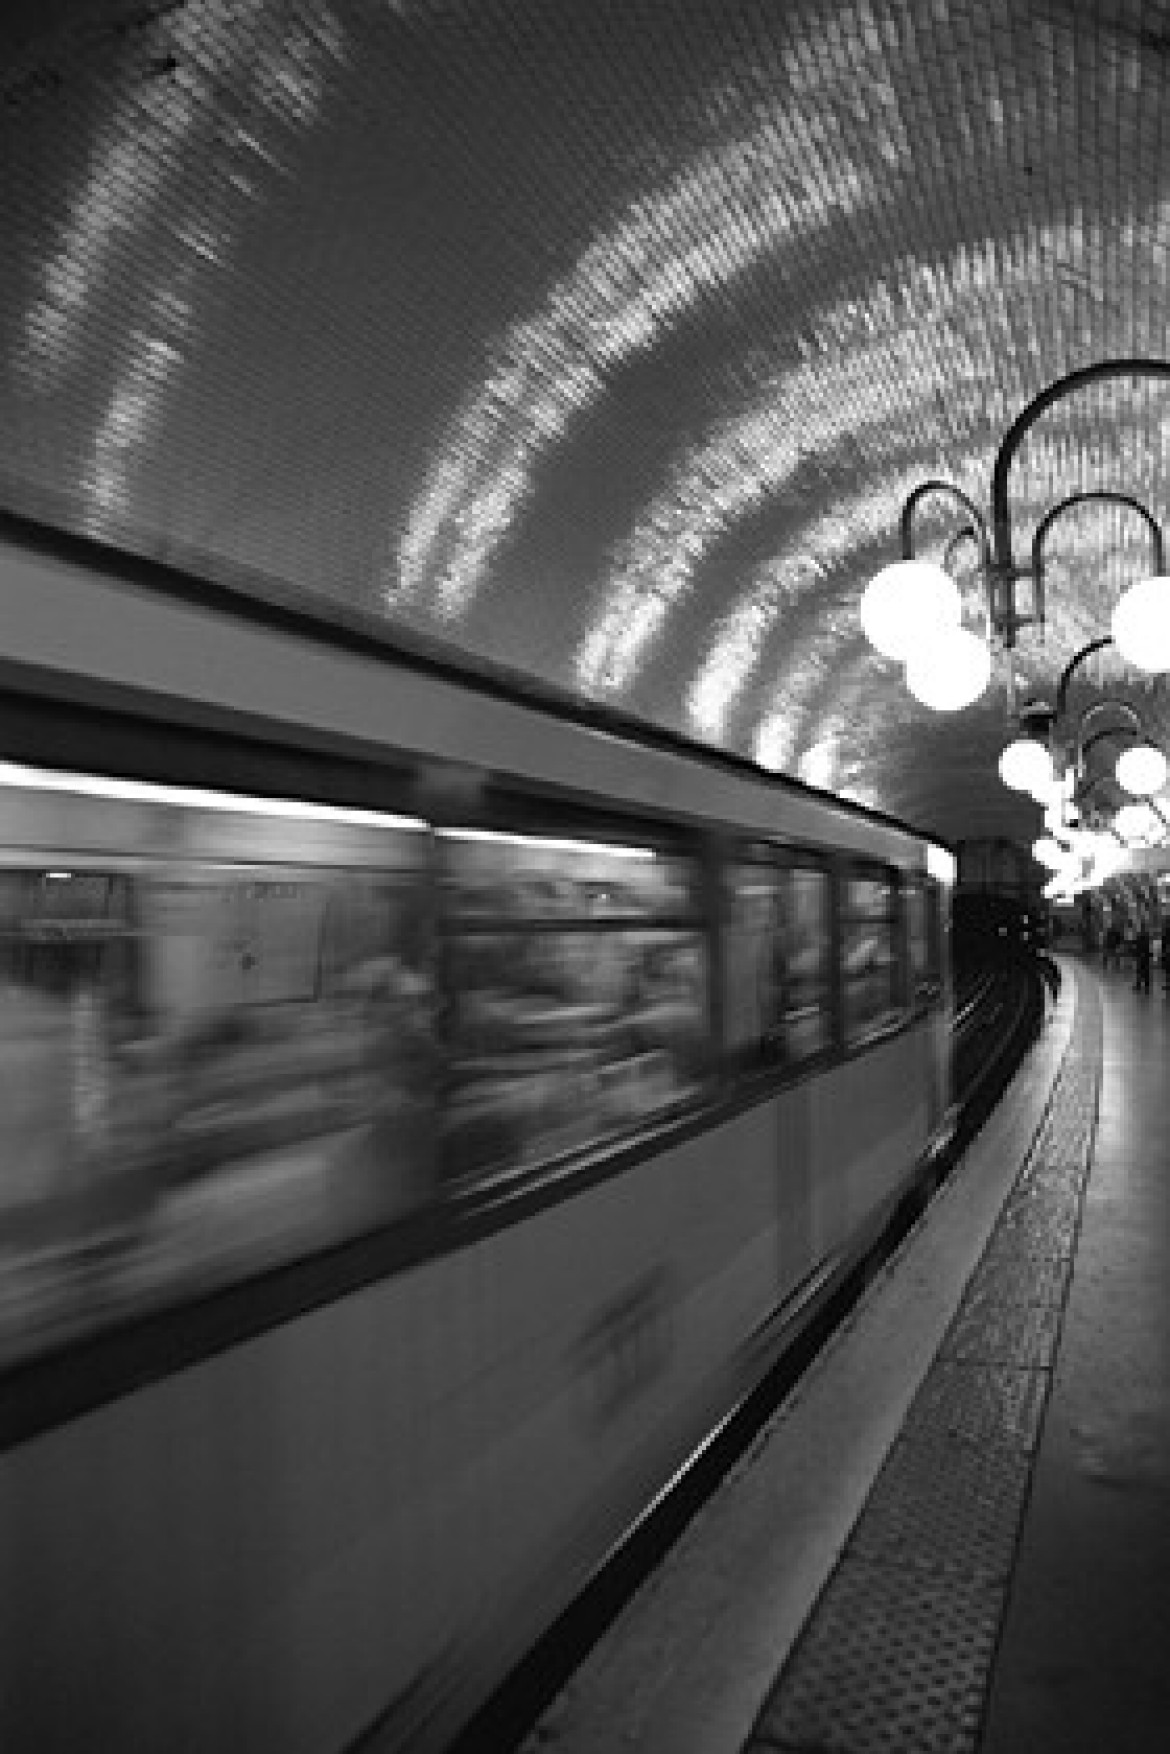 "Paris Underground (2)" - fot. Tomasz Jankowski